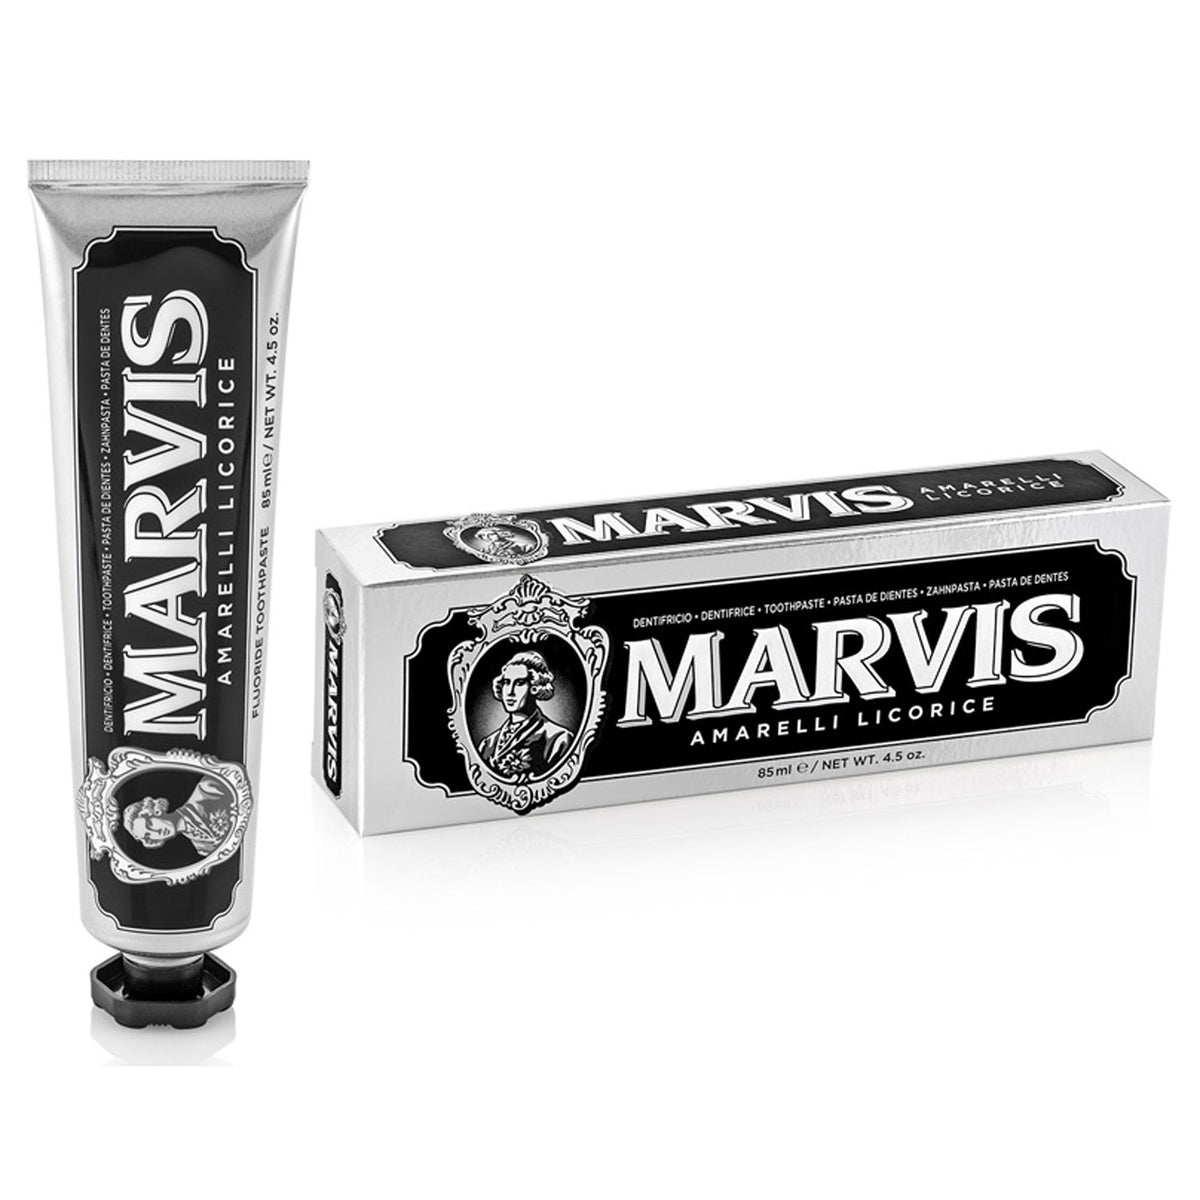 Marvis Amarelli Licorice Toothpaste 85ml - Orcadia